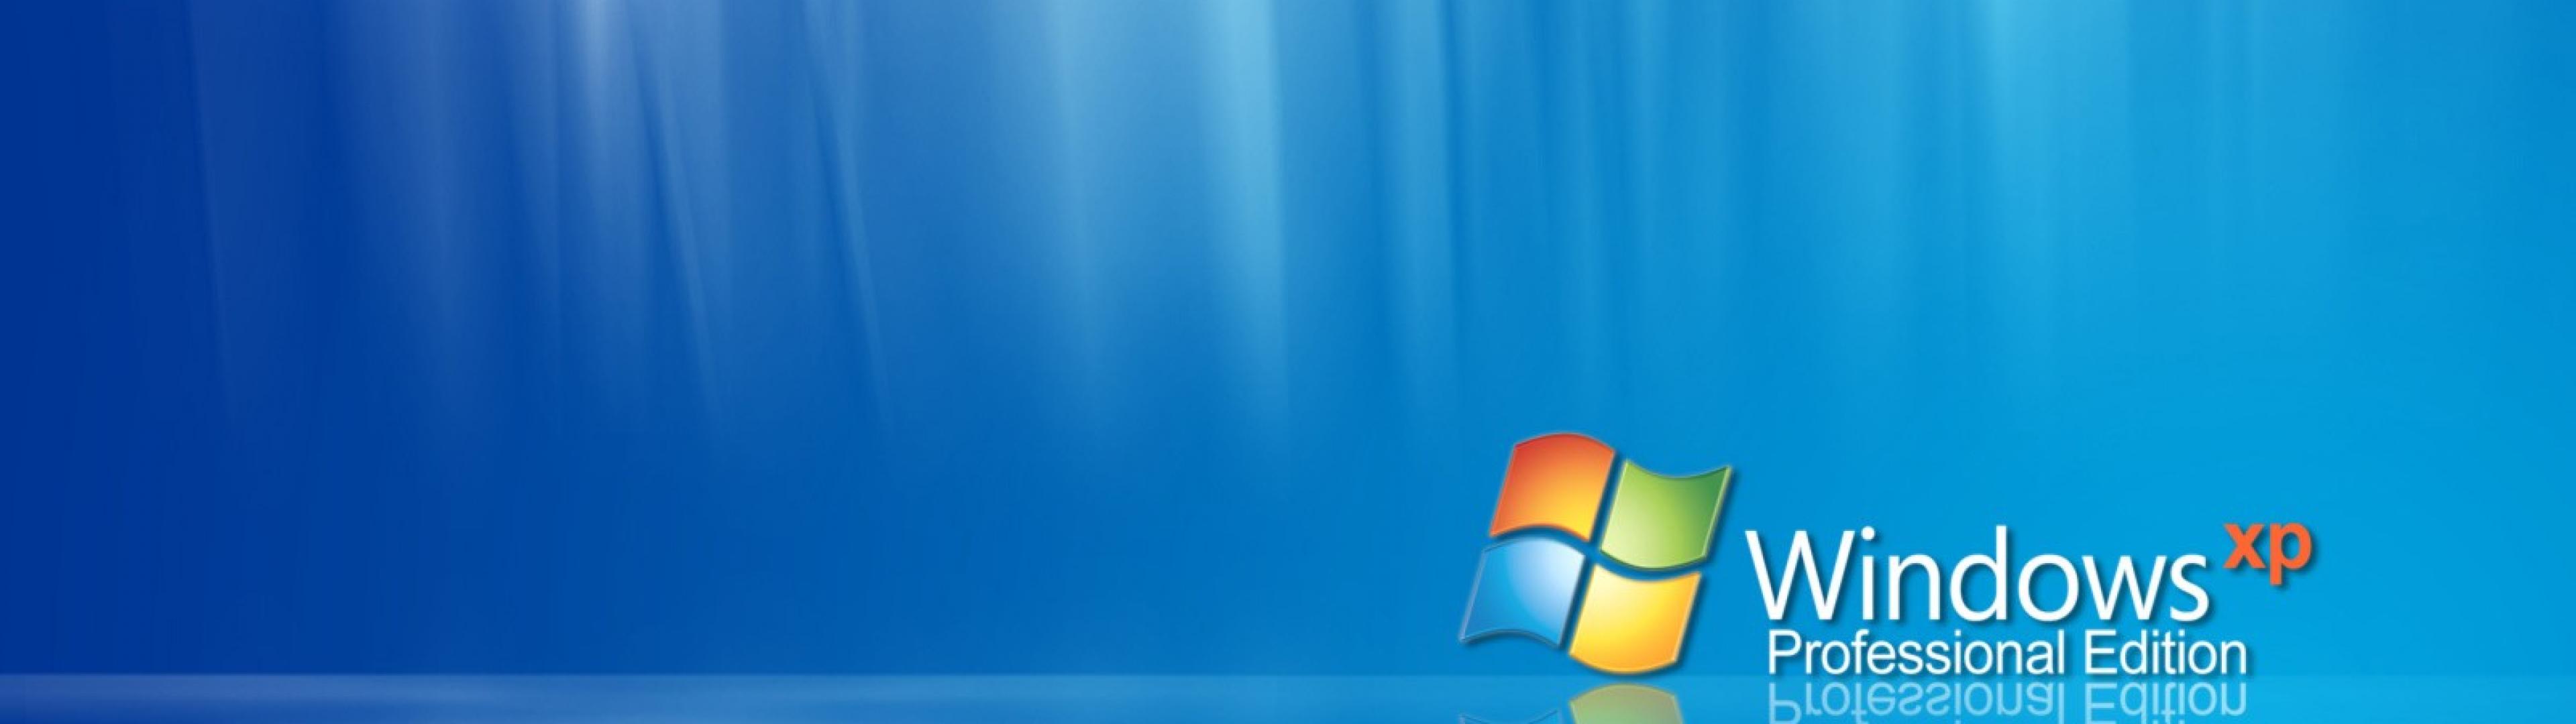 Windows Xp Wallpaper For Windows 11 2024 - Win 11 Home Upgrade 2024